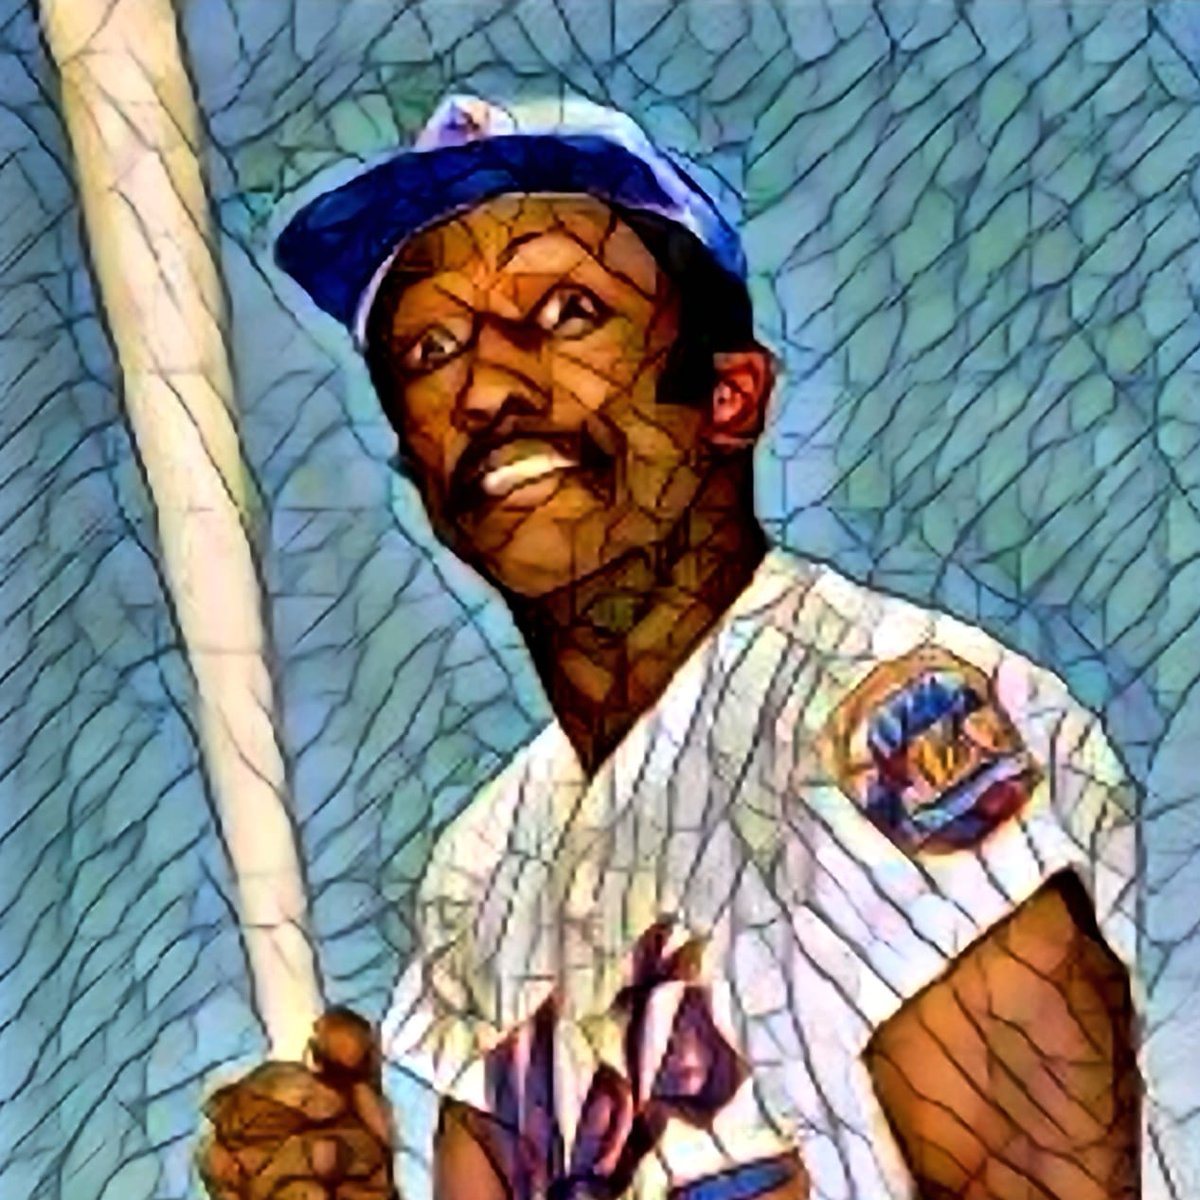 Started going by 'Chico' back in '79... #Beisbol #Mosaic #SNL #Mets #GarrettMorris